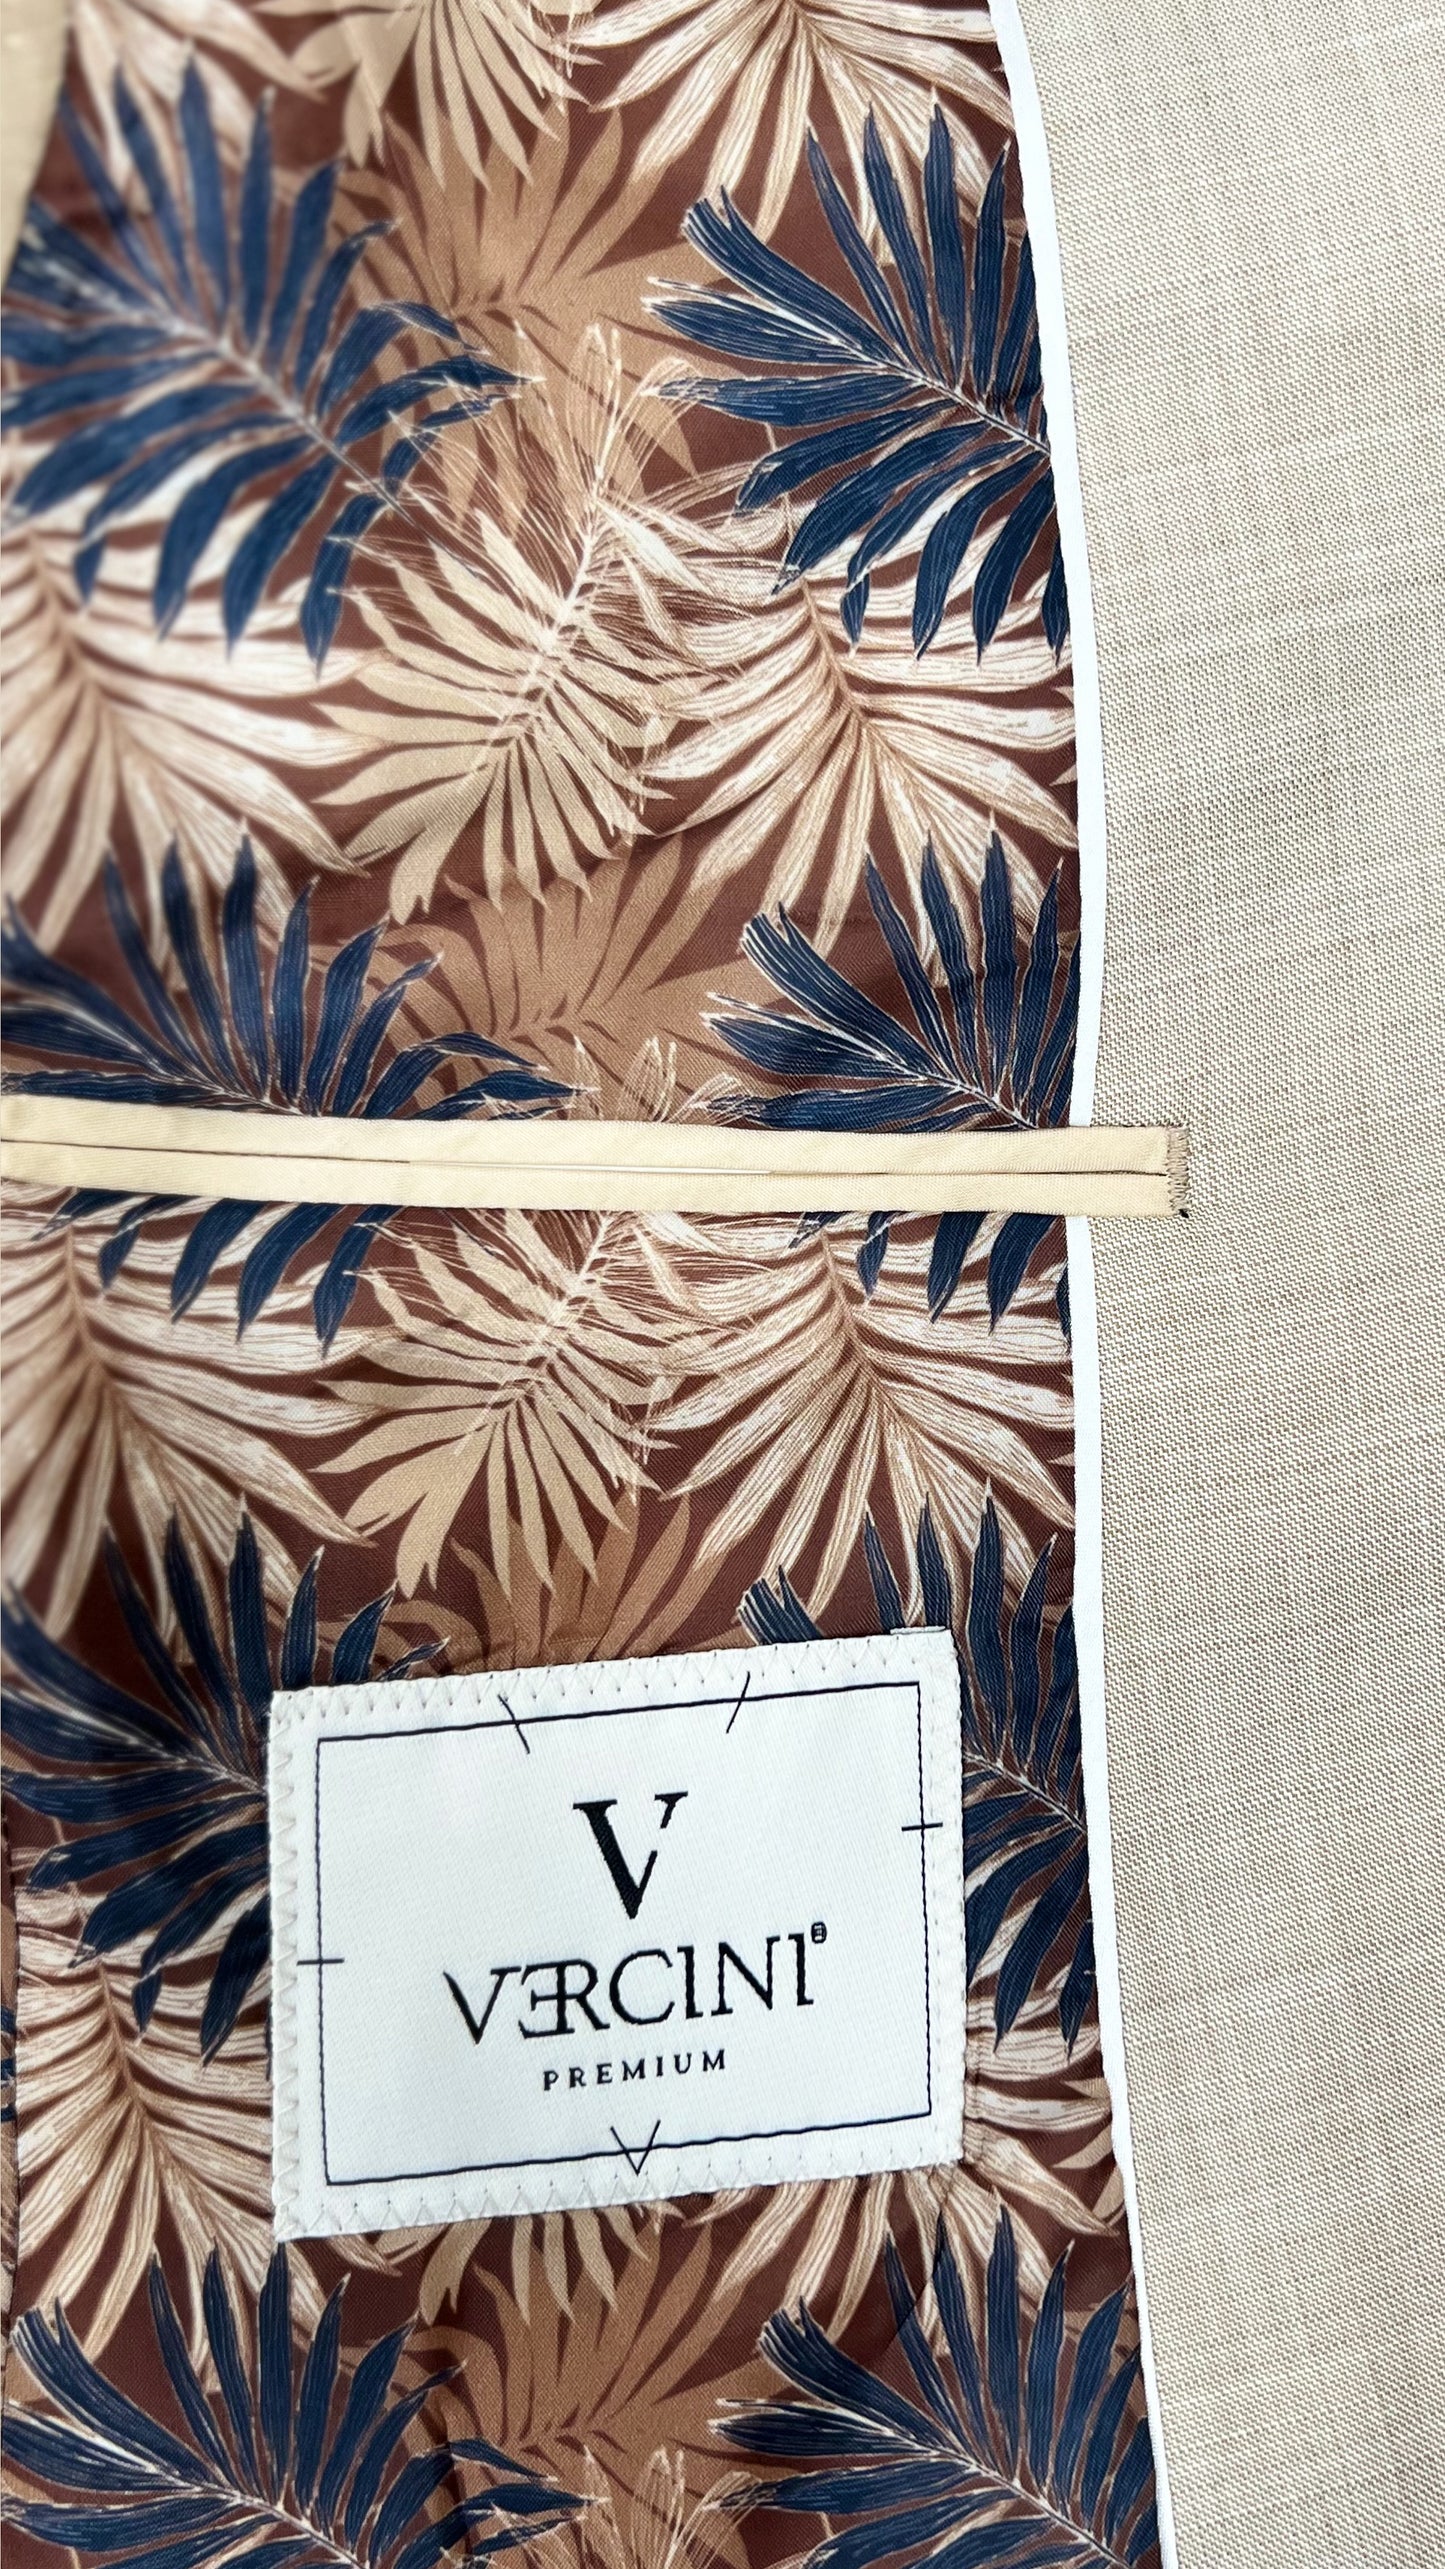 Vercini Versatile Vogue 2 Piece Men's Suit